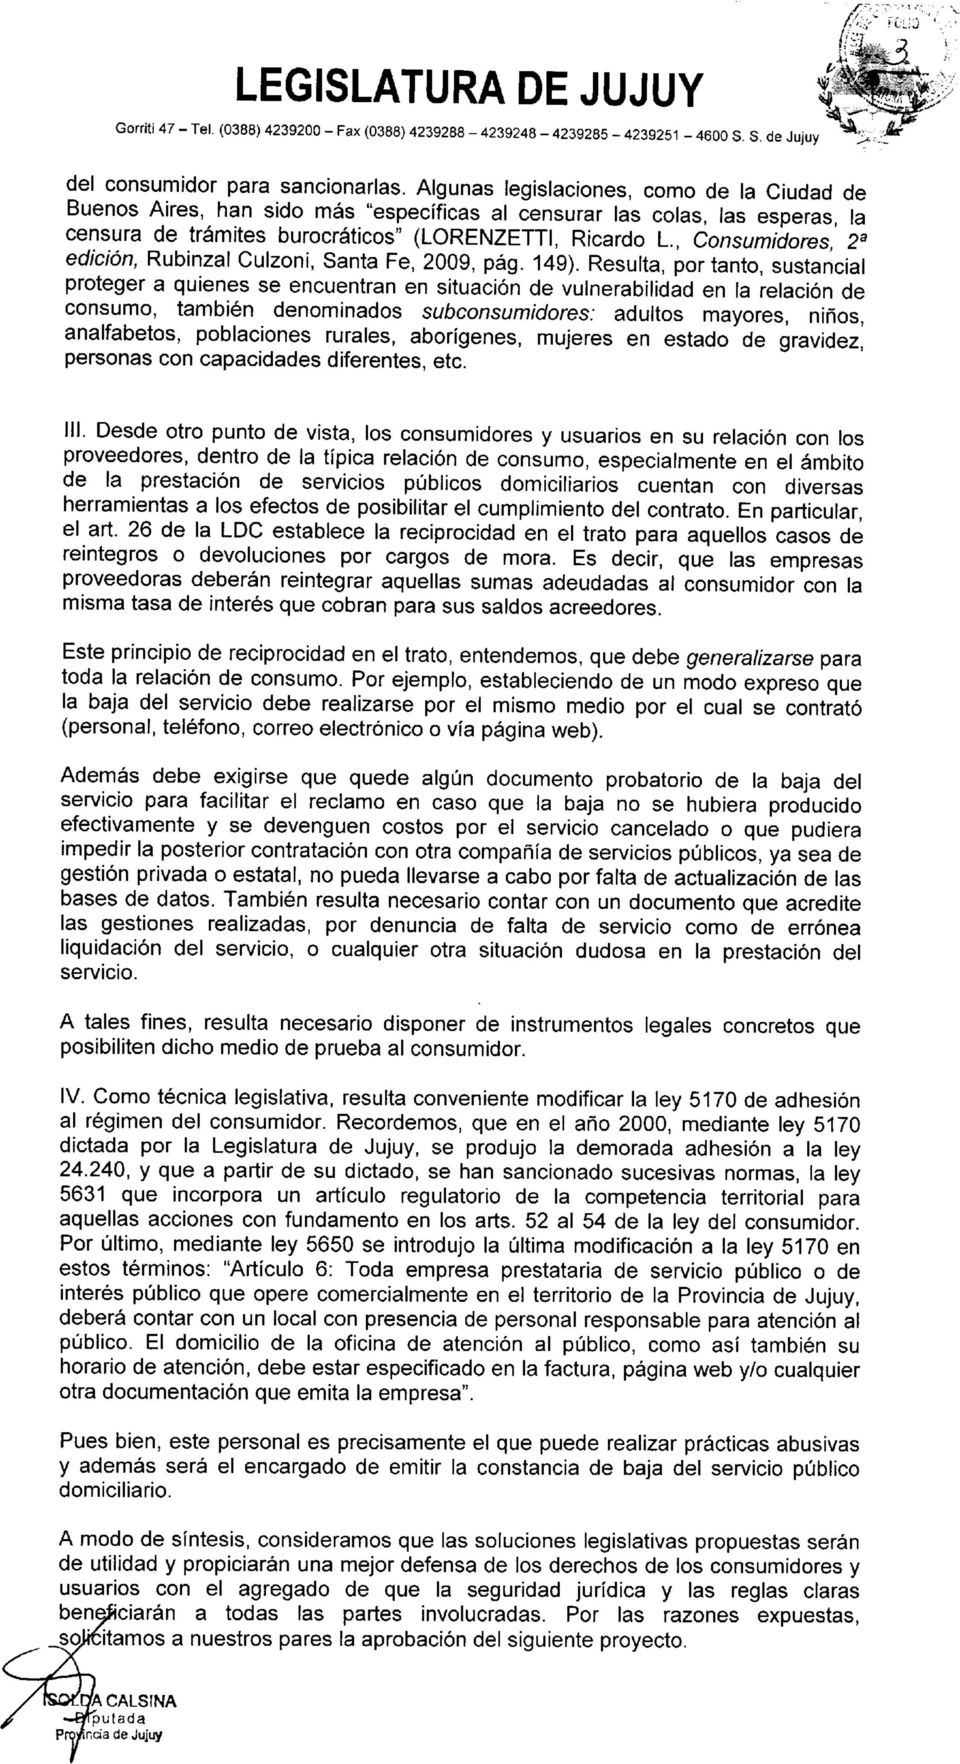 edición, Rubinzal Culzoni, Santa Fe, 2009, pág. 149).